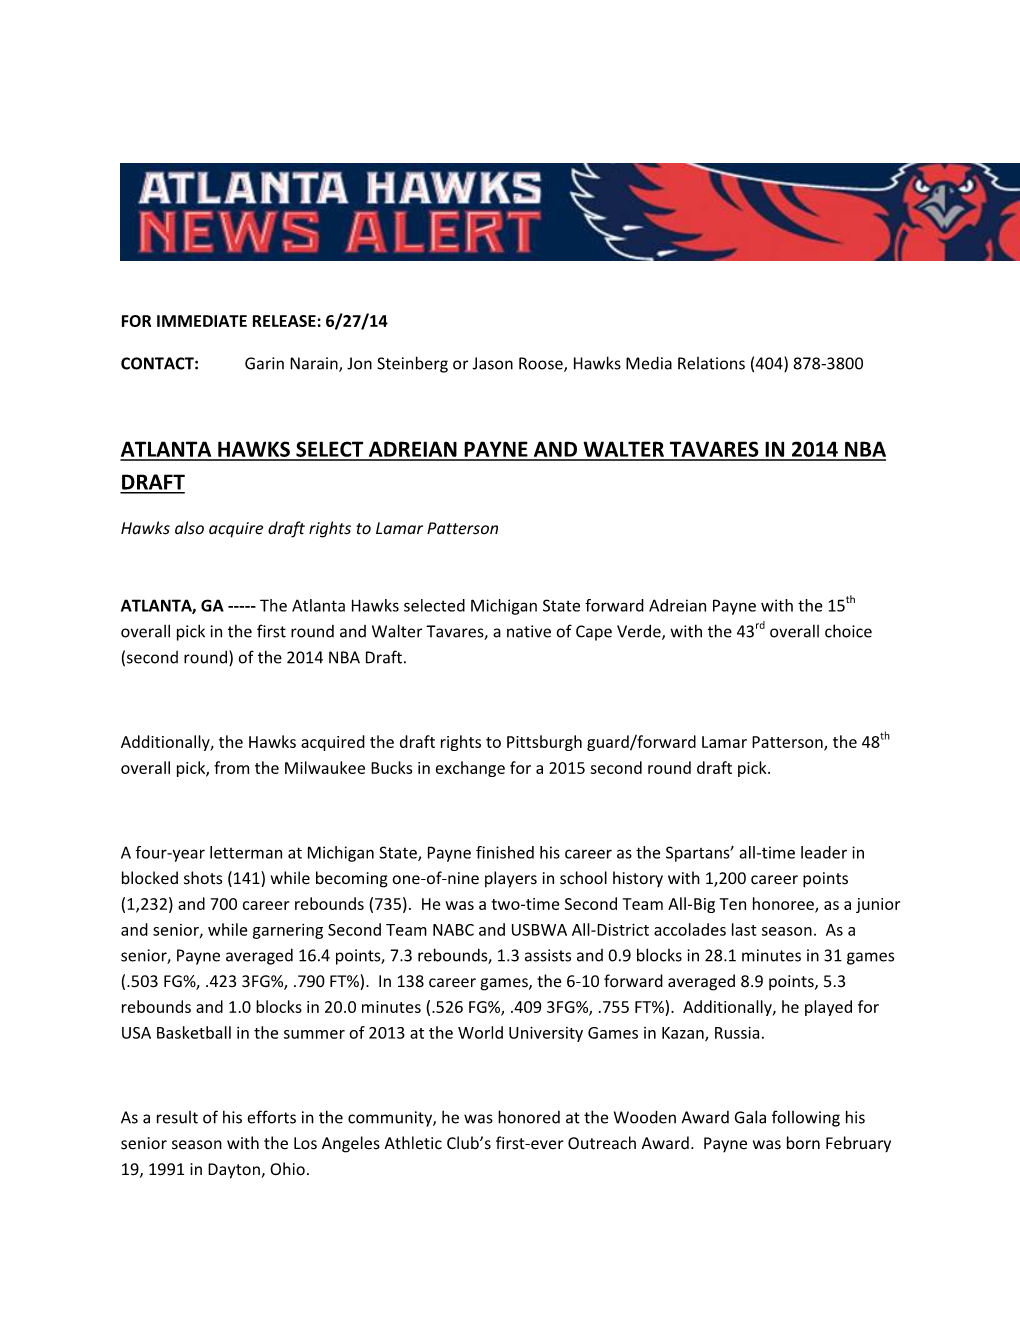 Atlanta Hawks Select Adreian Payne and Walter Tavares in 2014 Nba Draft